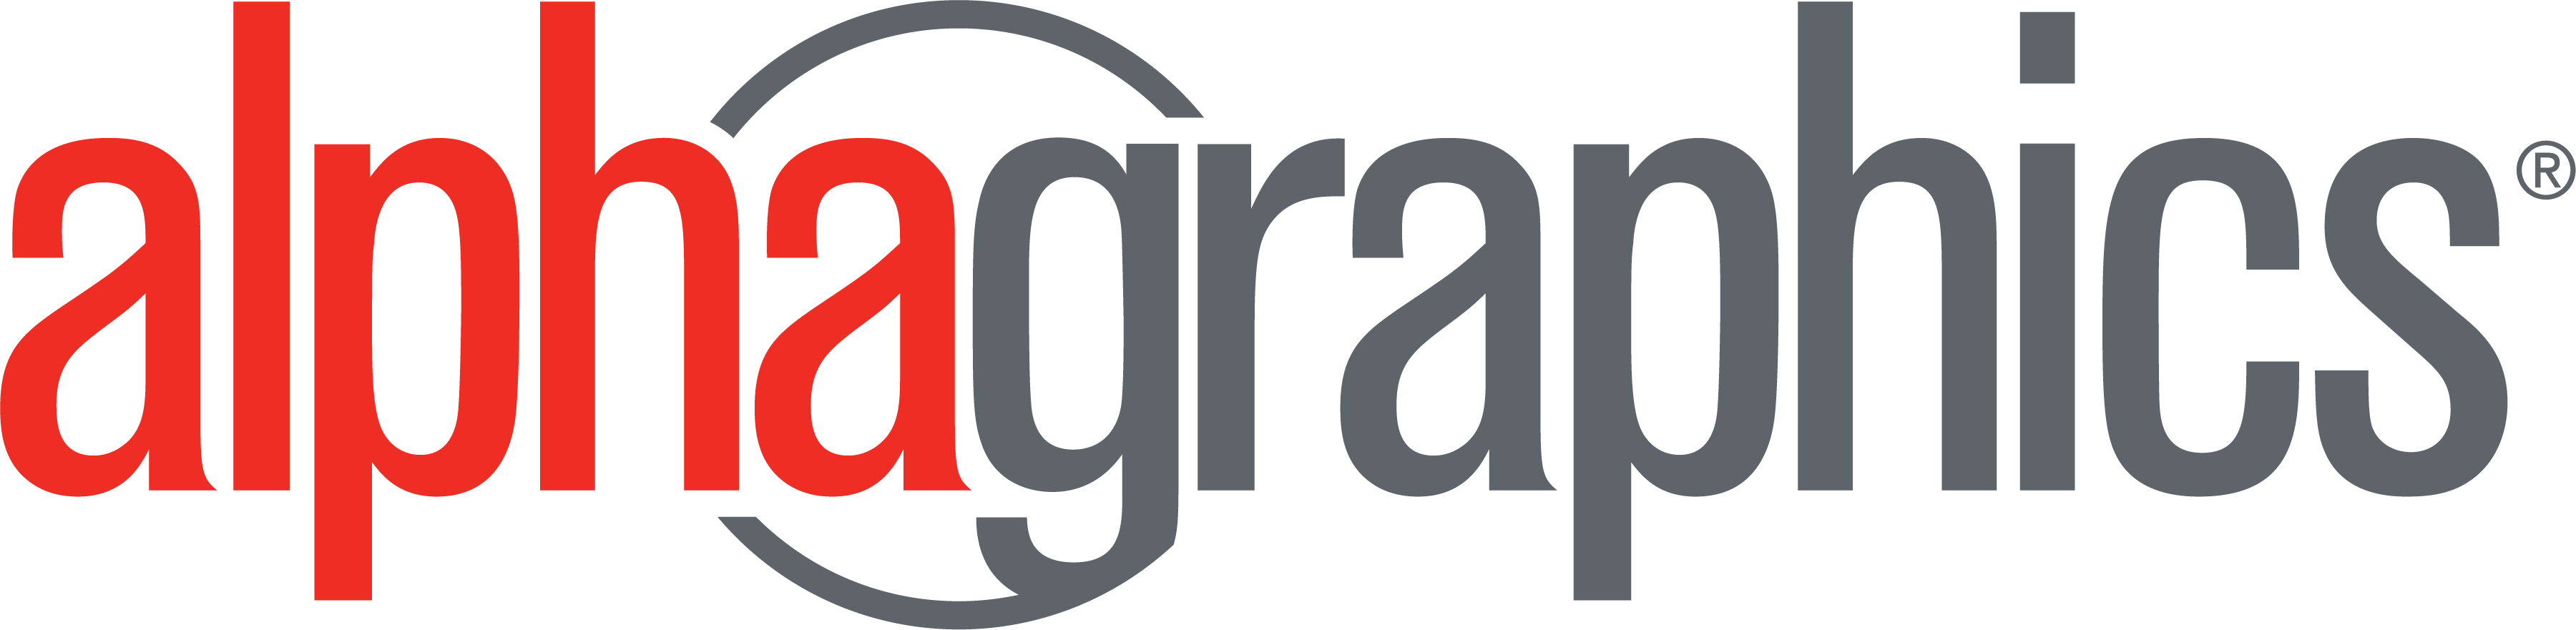 AlphaGraphics Corporate